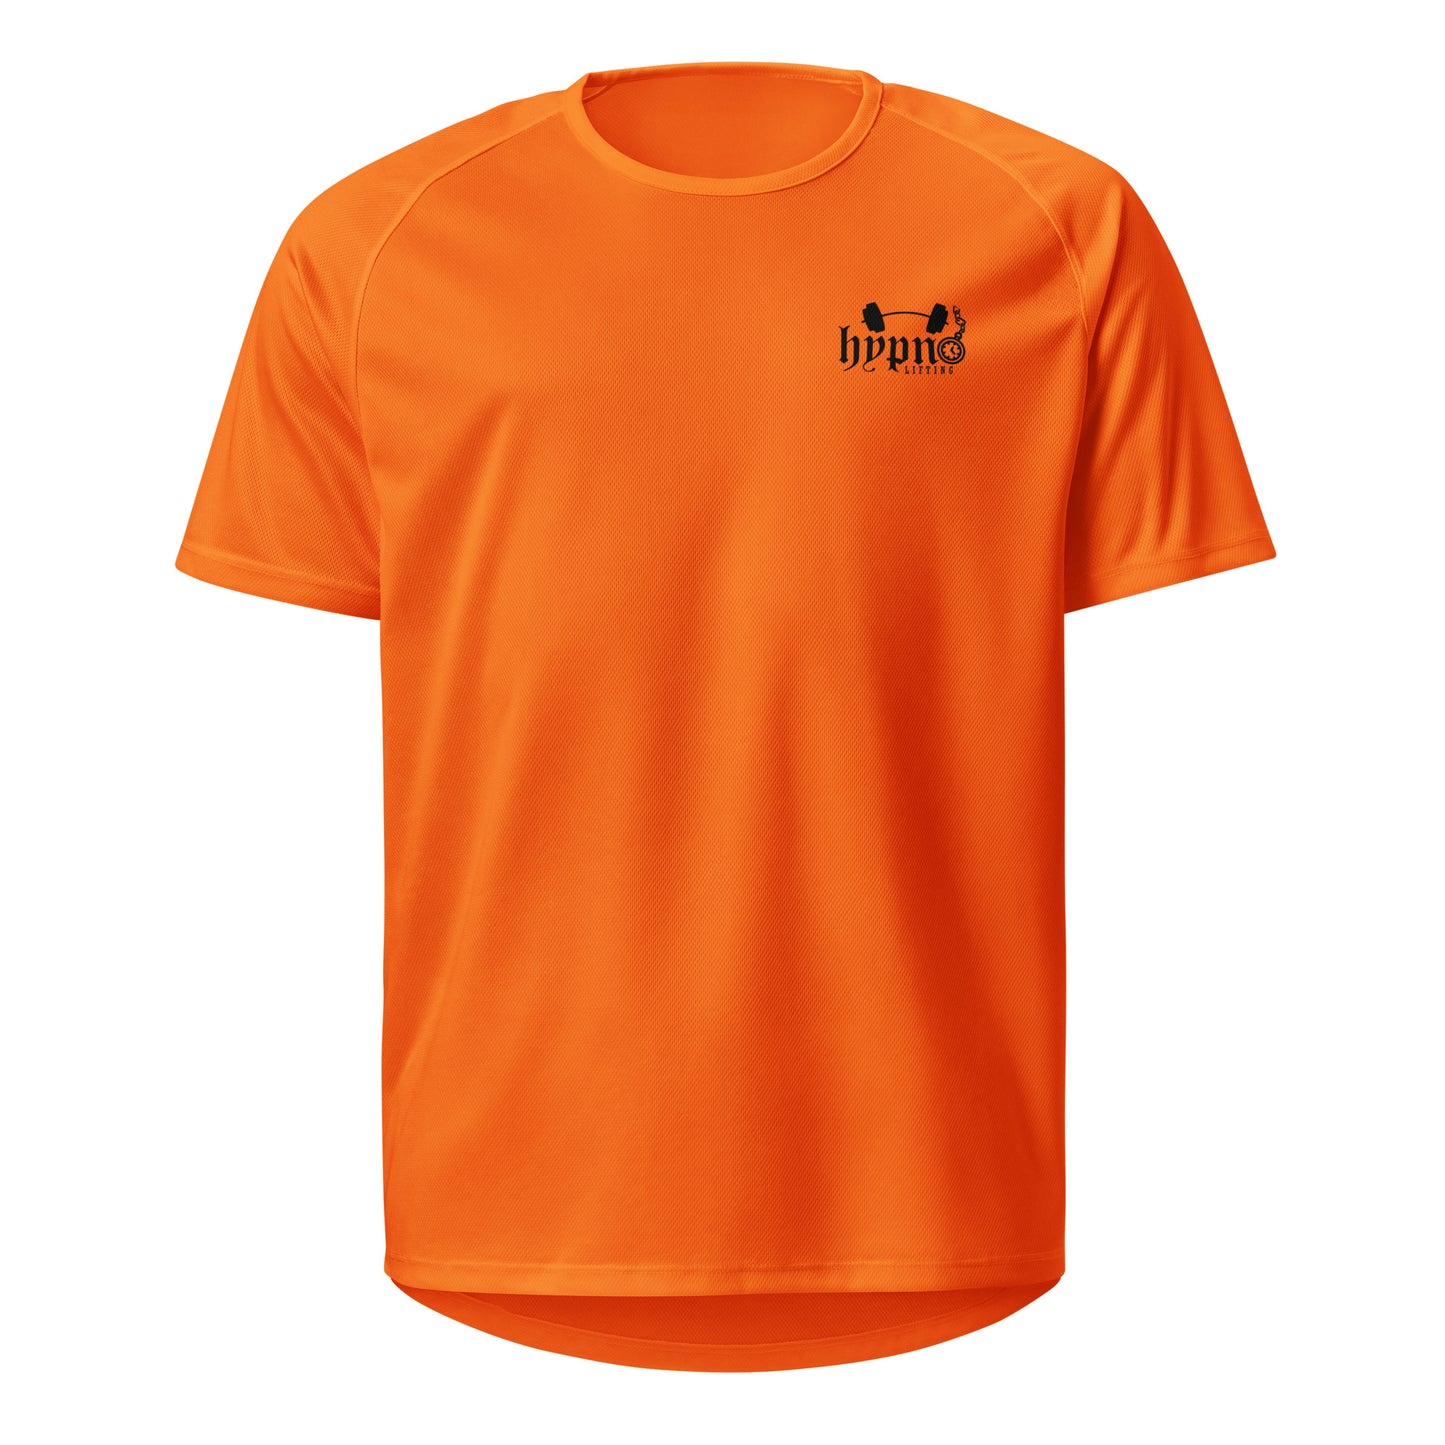 Hypno Lifting Unisex Athletic T-Shirt (Black Logo)